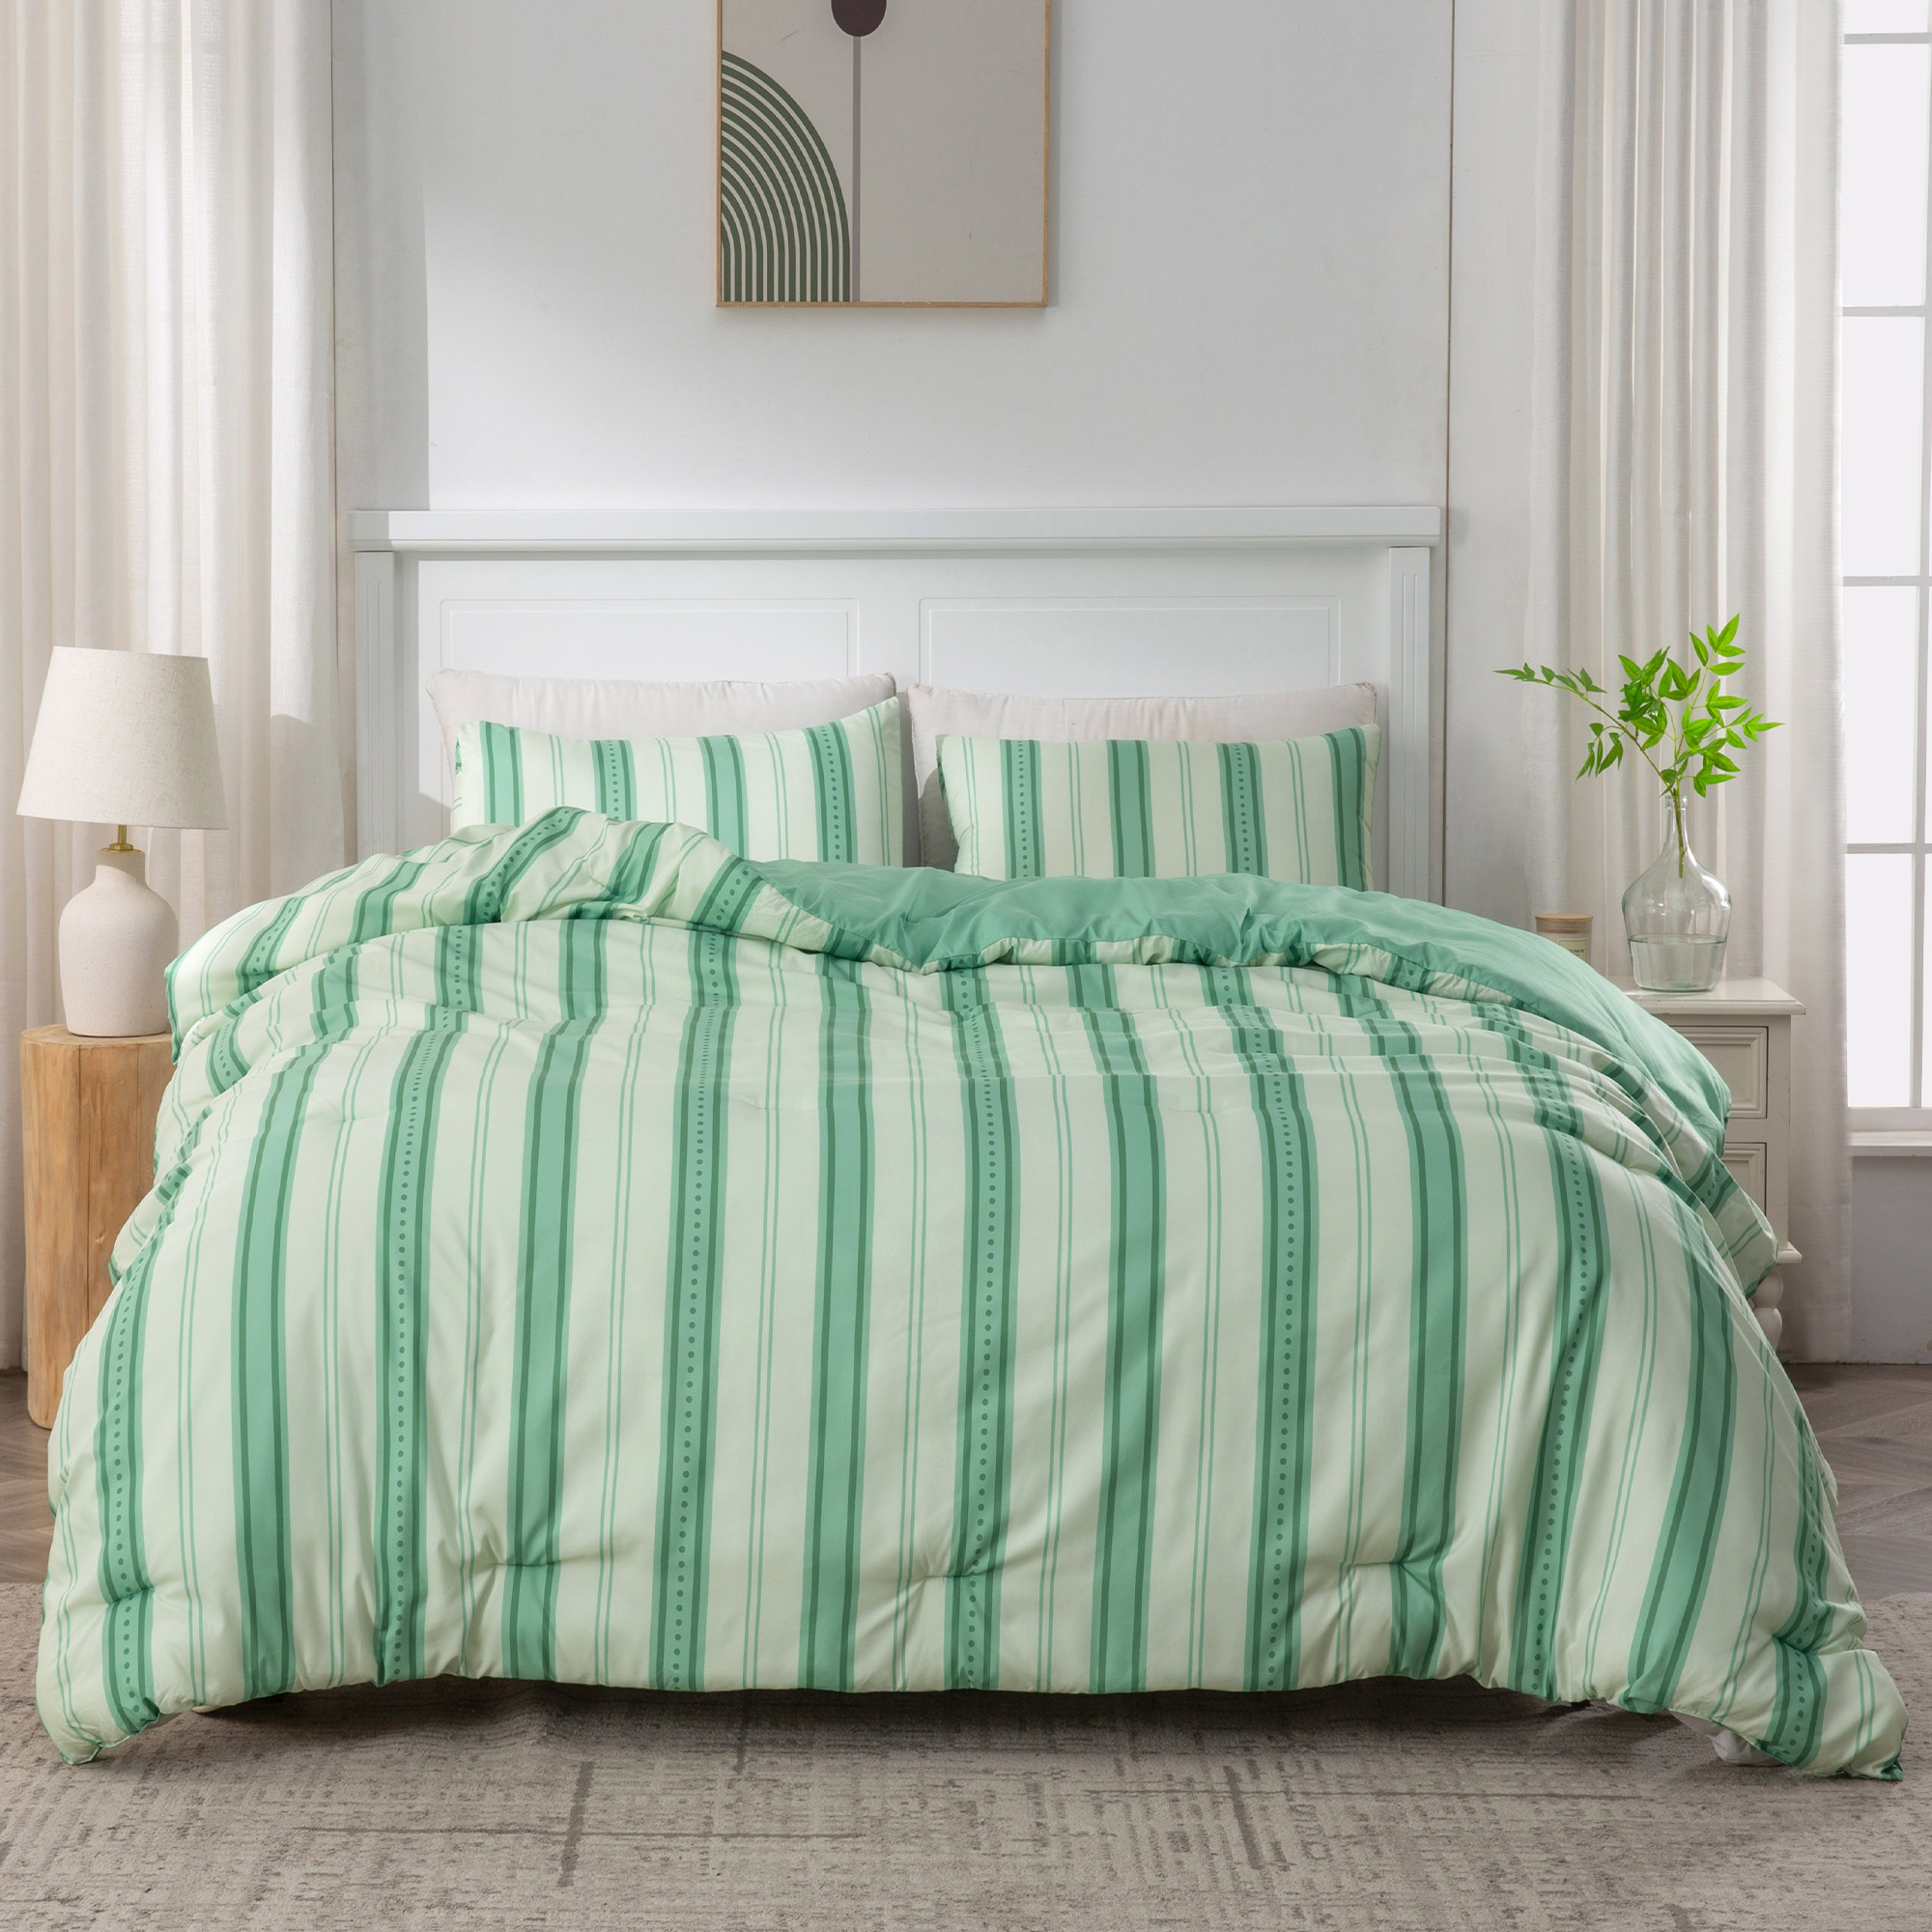 Ultra Soft Reversible Printed Stripe Microfiber Comforter Set - All-Season Warmth, Green - King